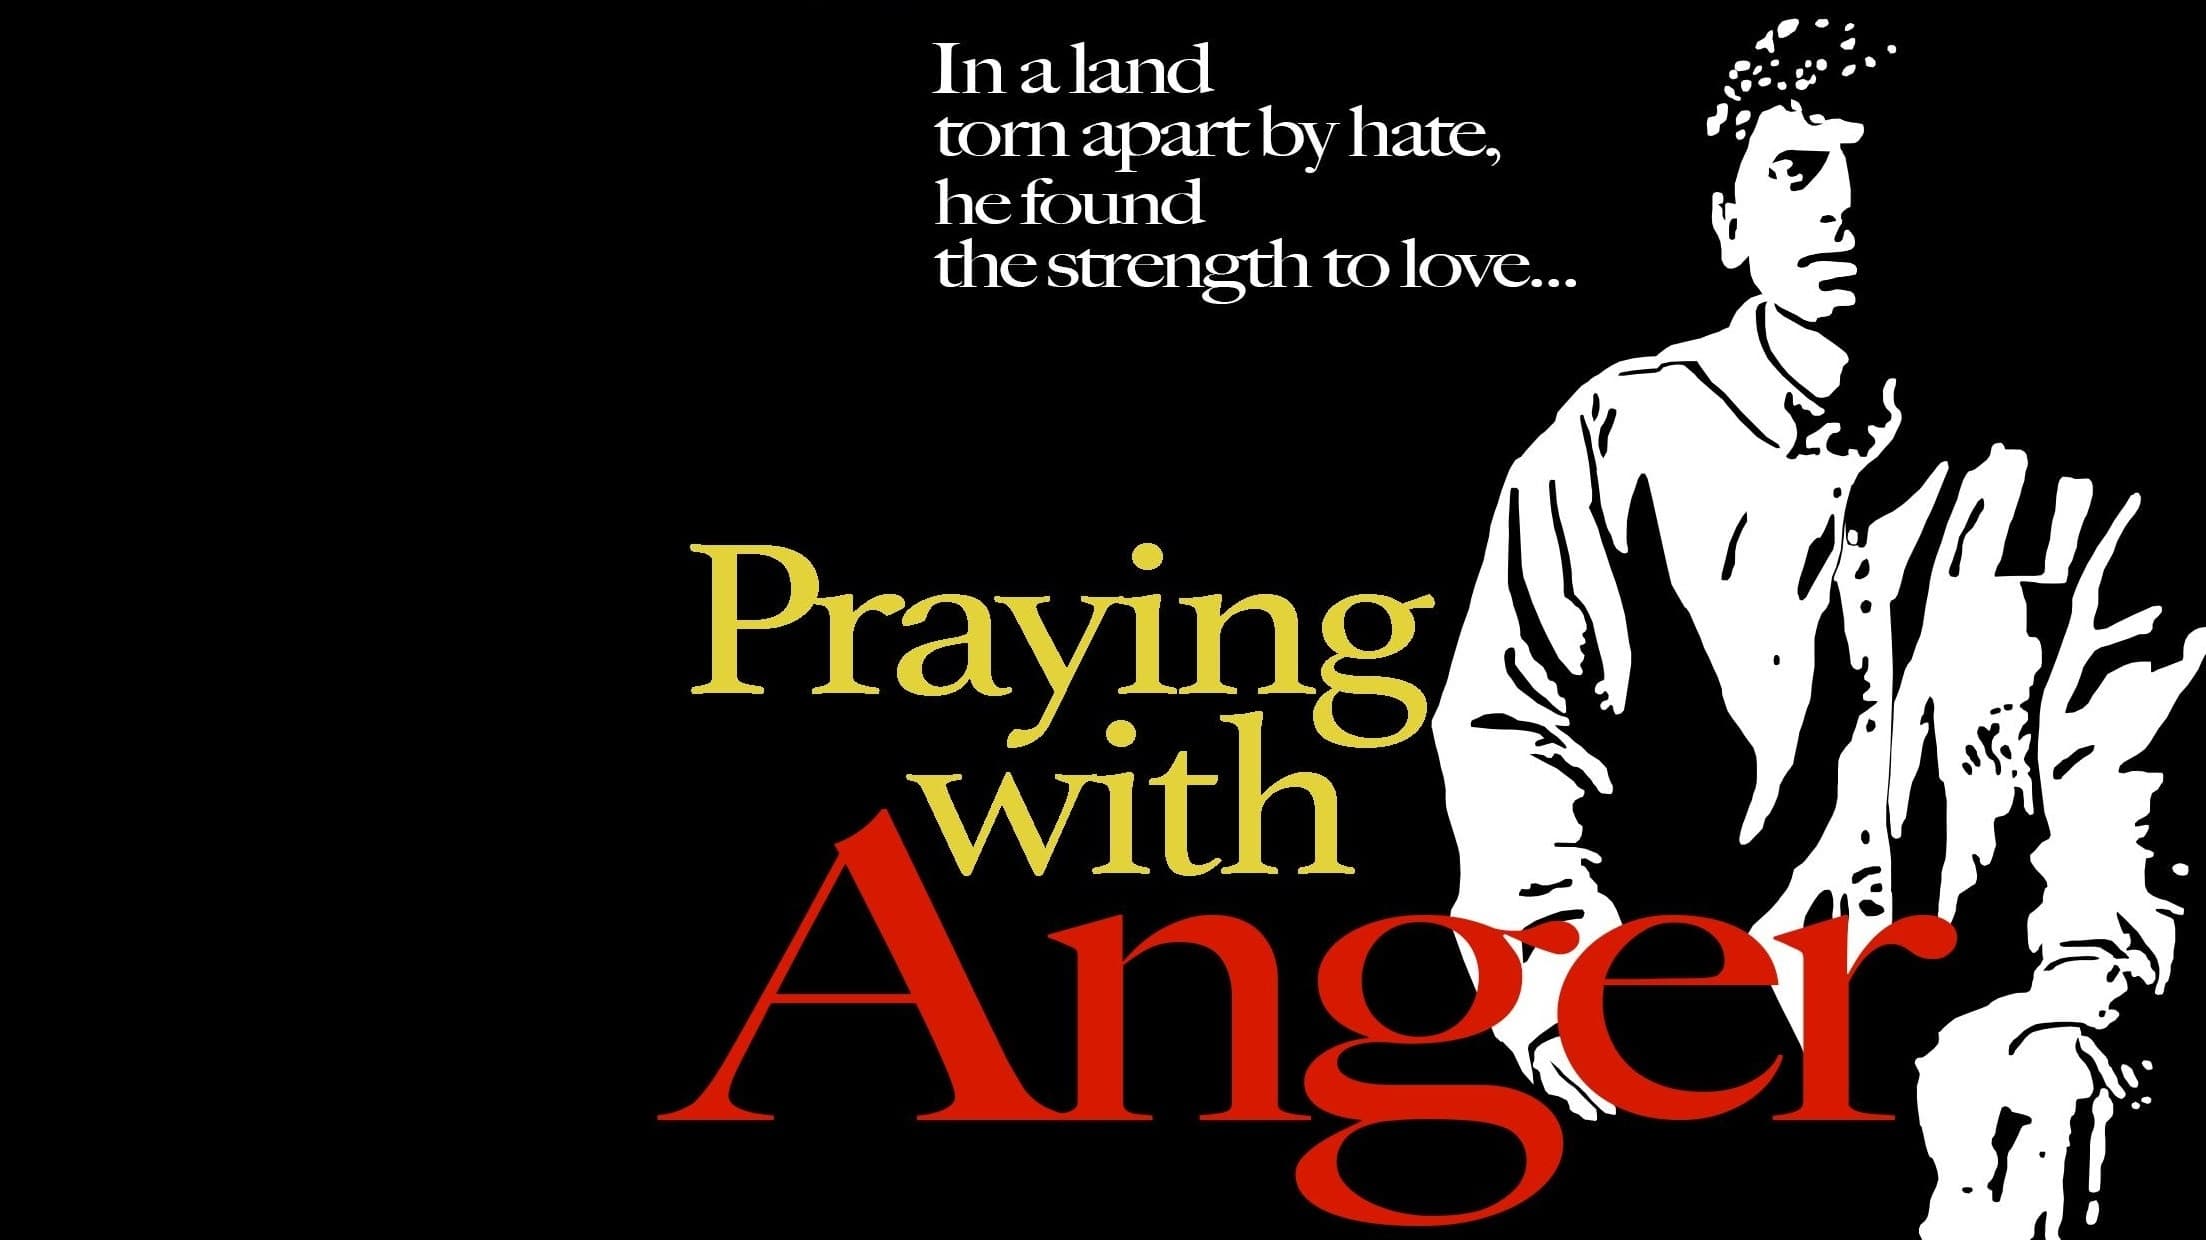 Praying with Anger